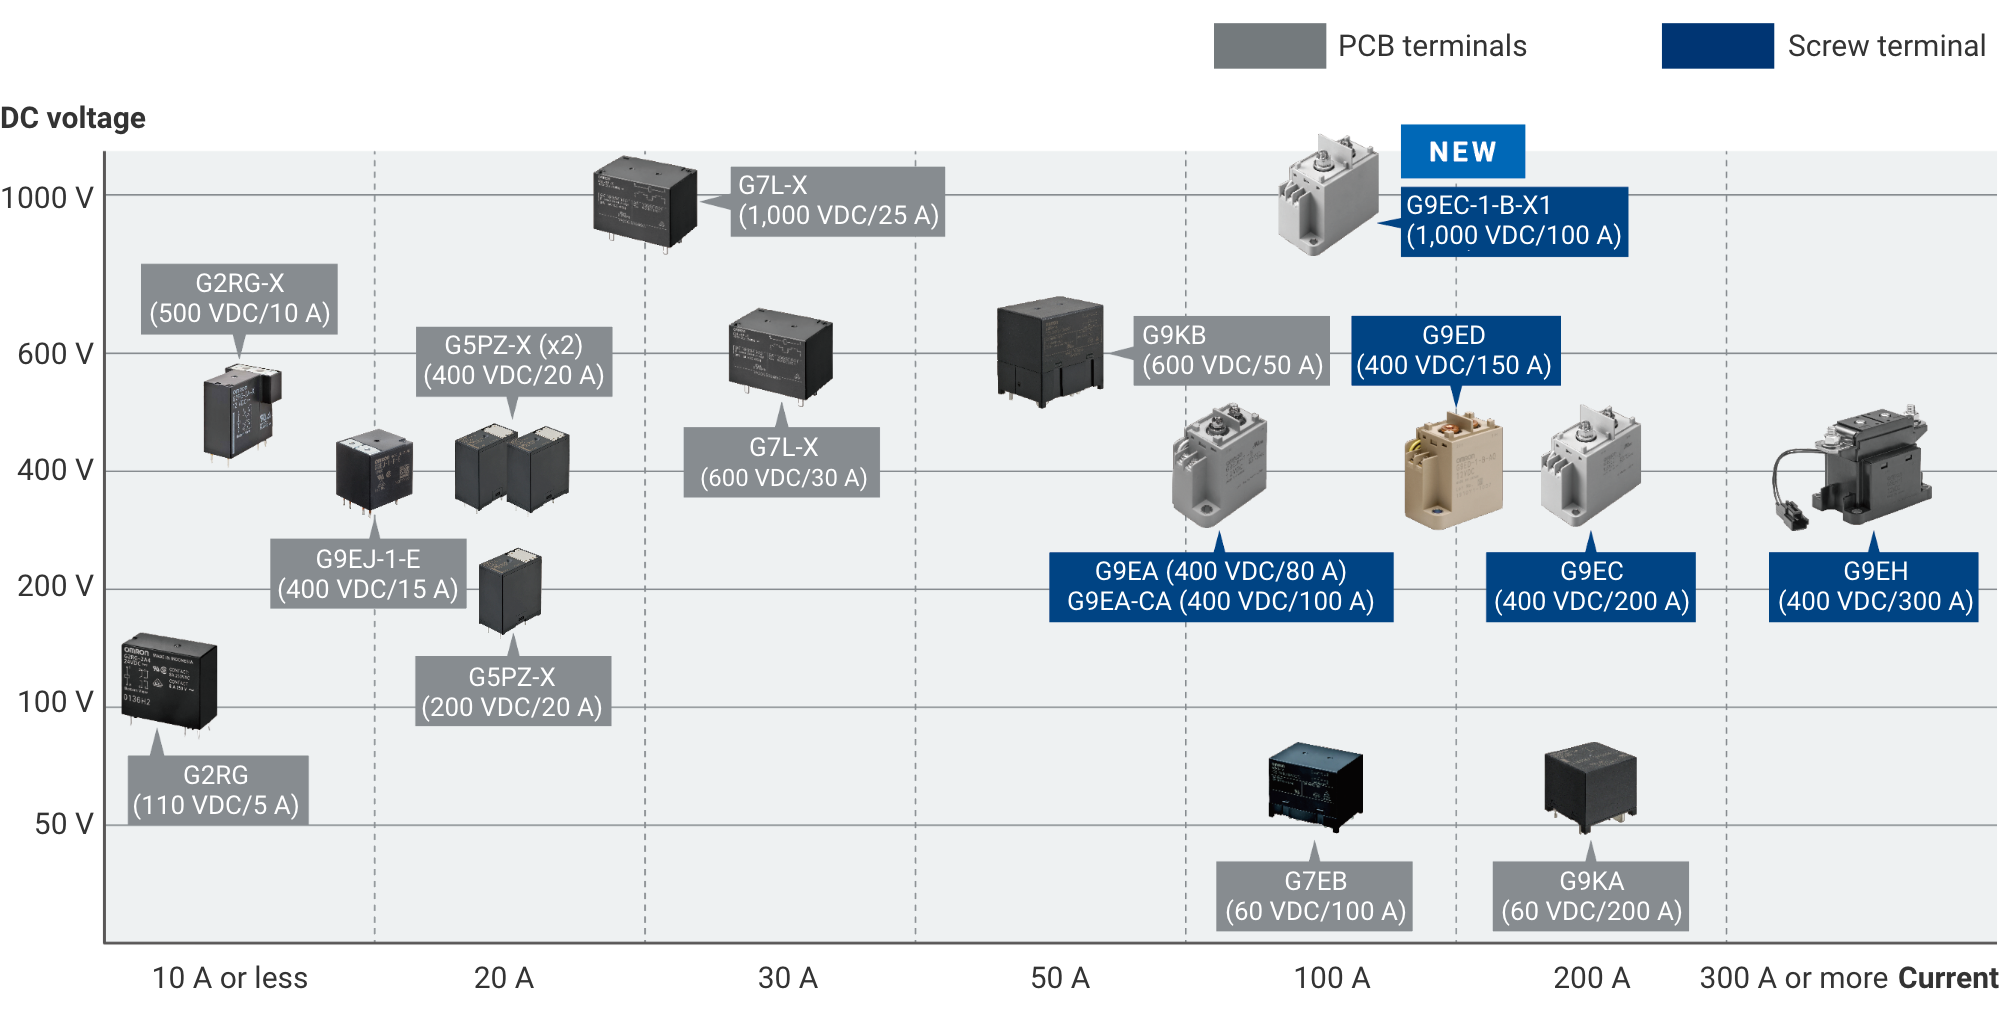 PCB terminals, Main performance of screw terminals